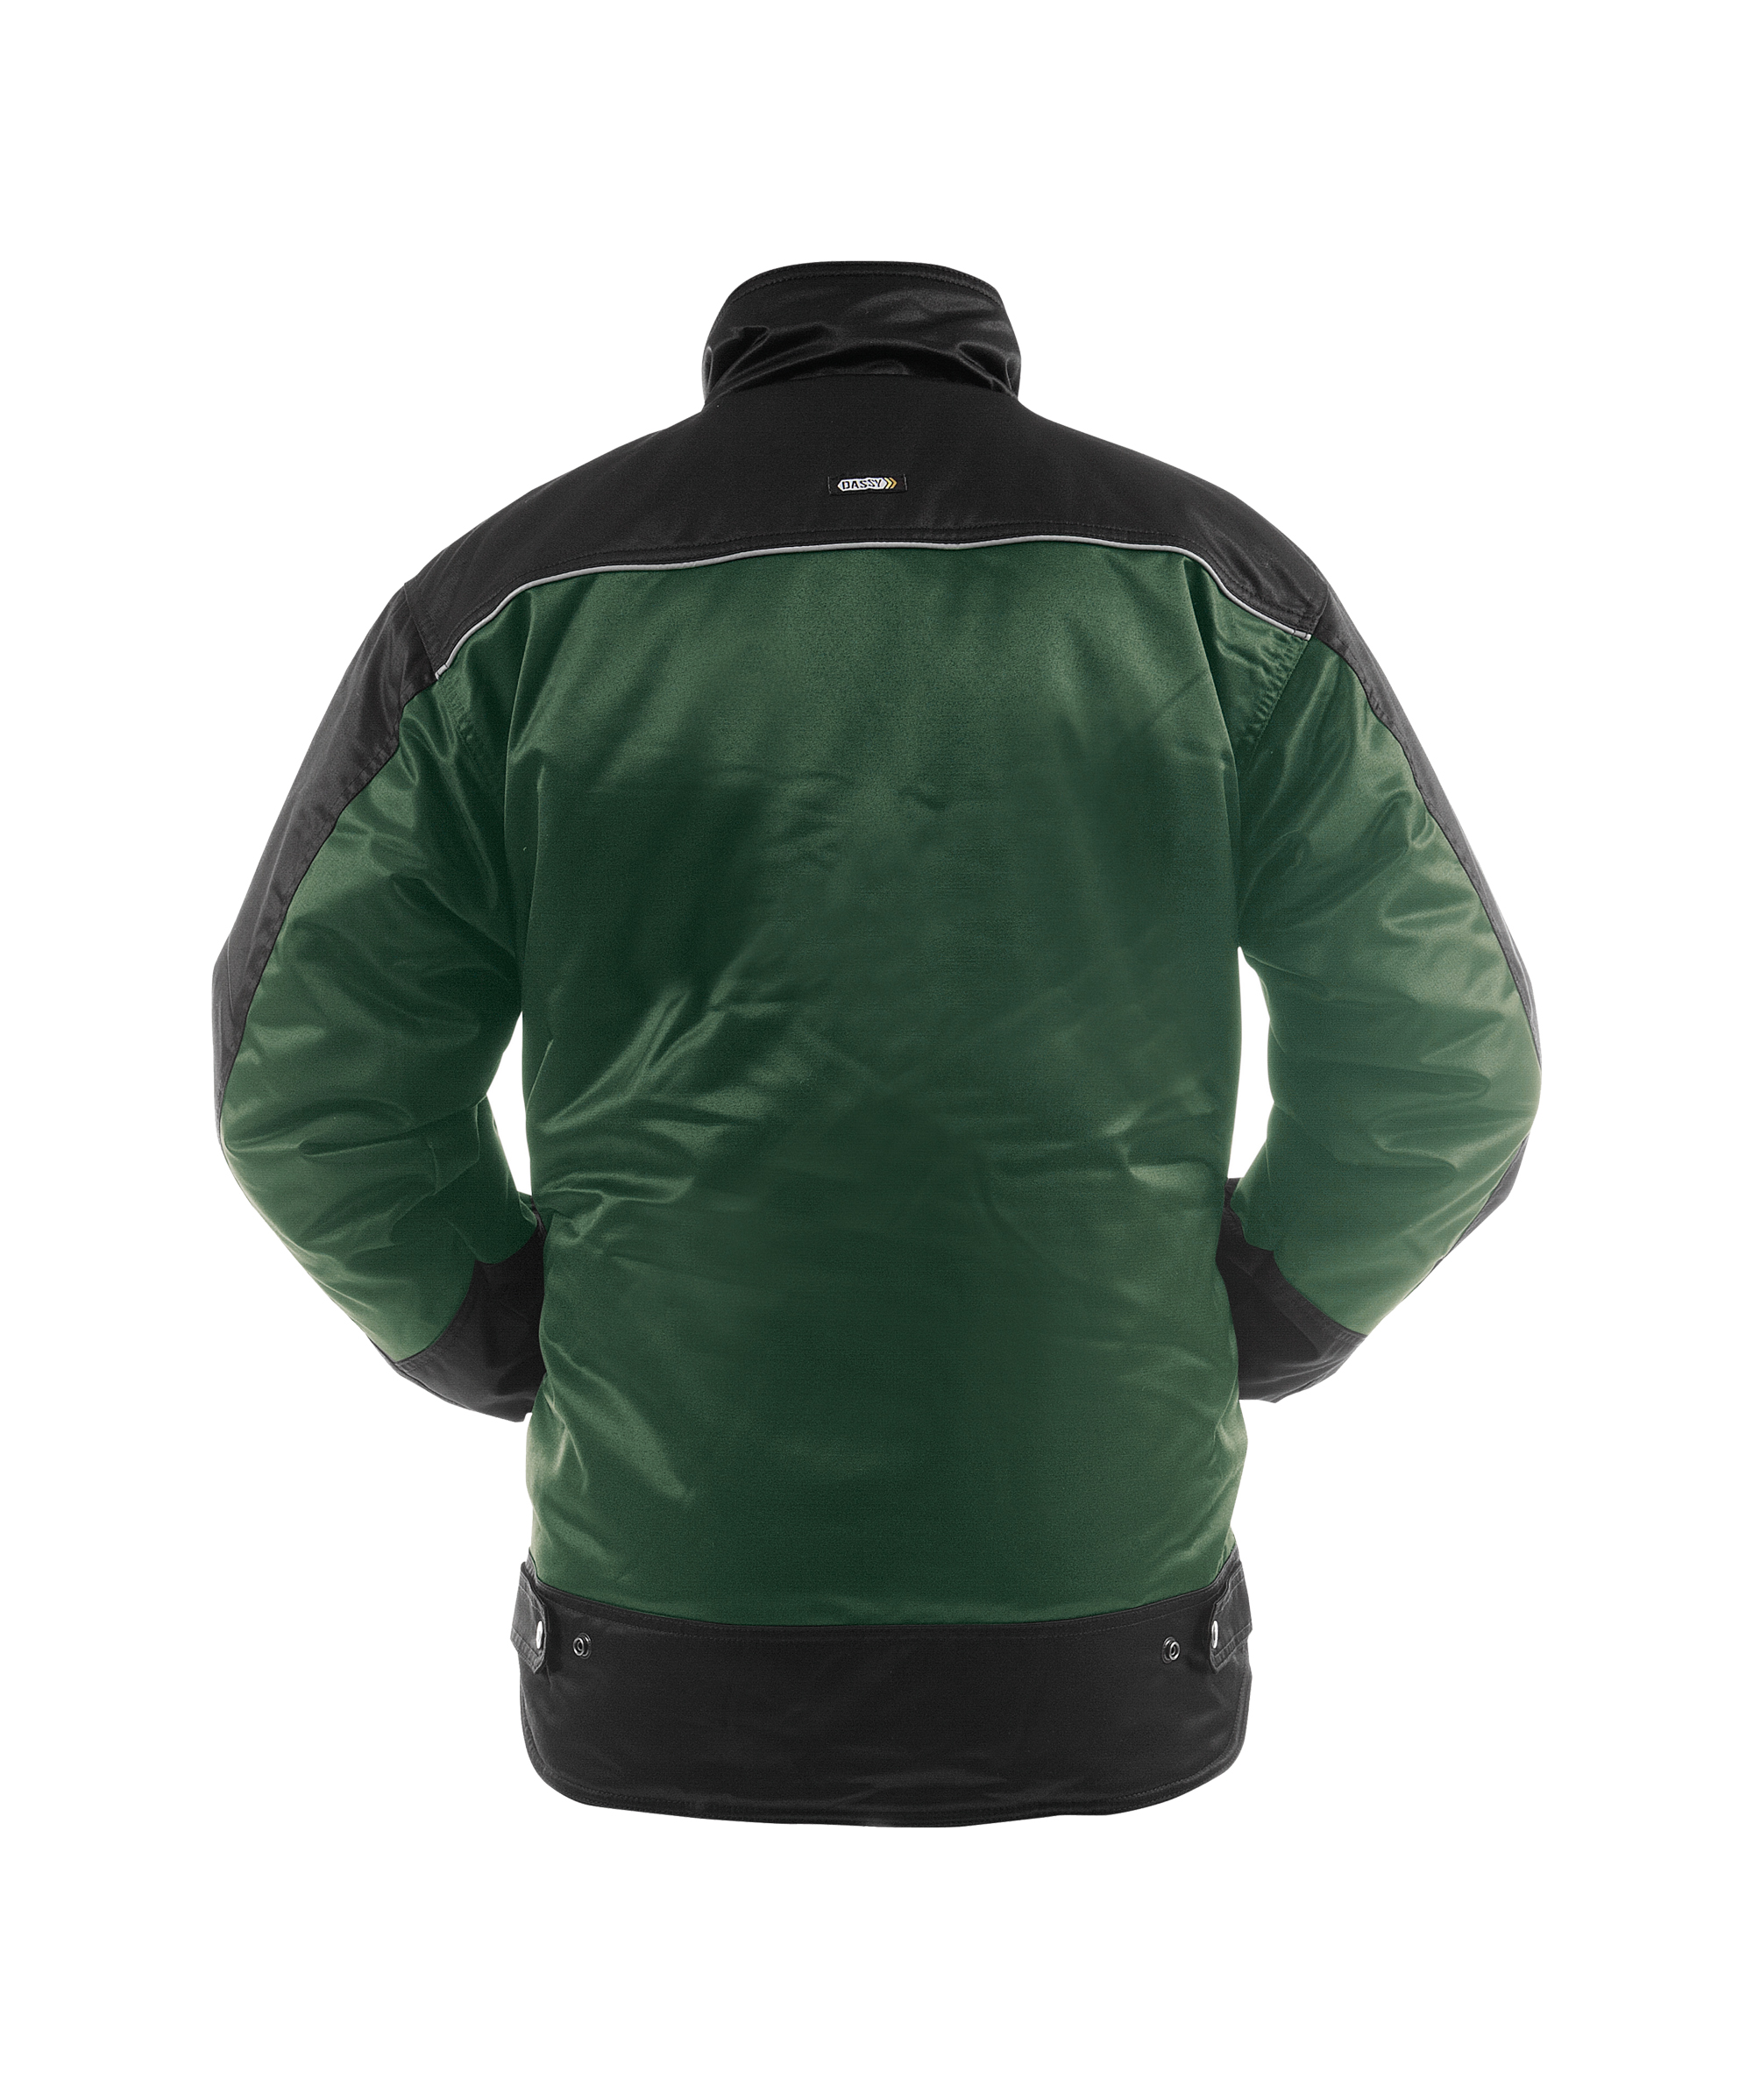 tignes_two-tone-beaver-winter-jacket_bottle-green-black_back.jpg